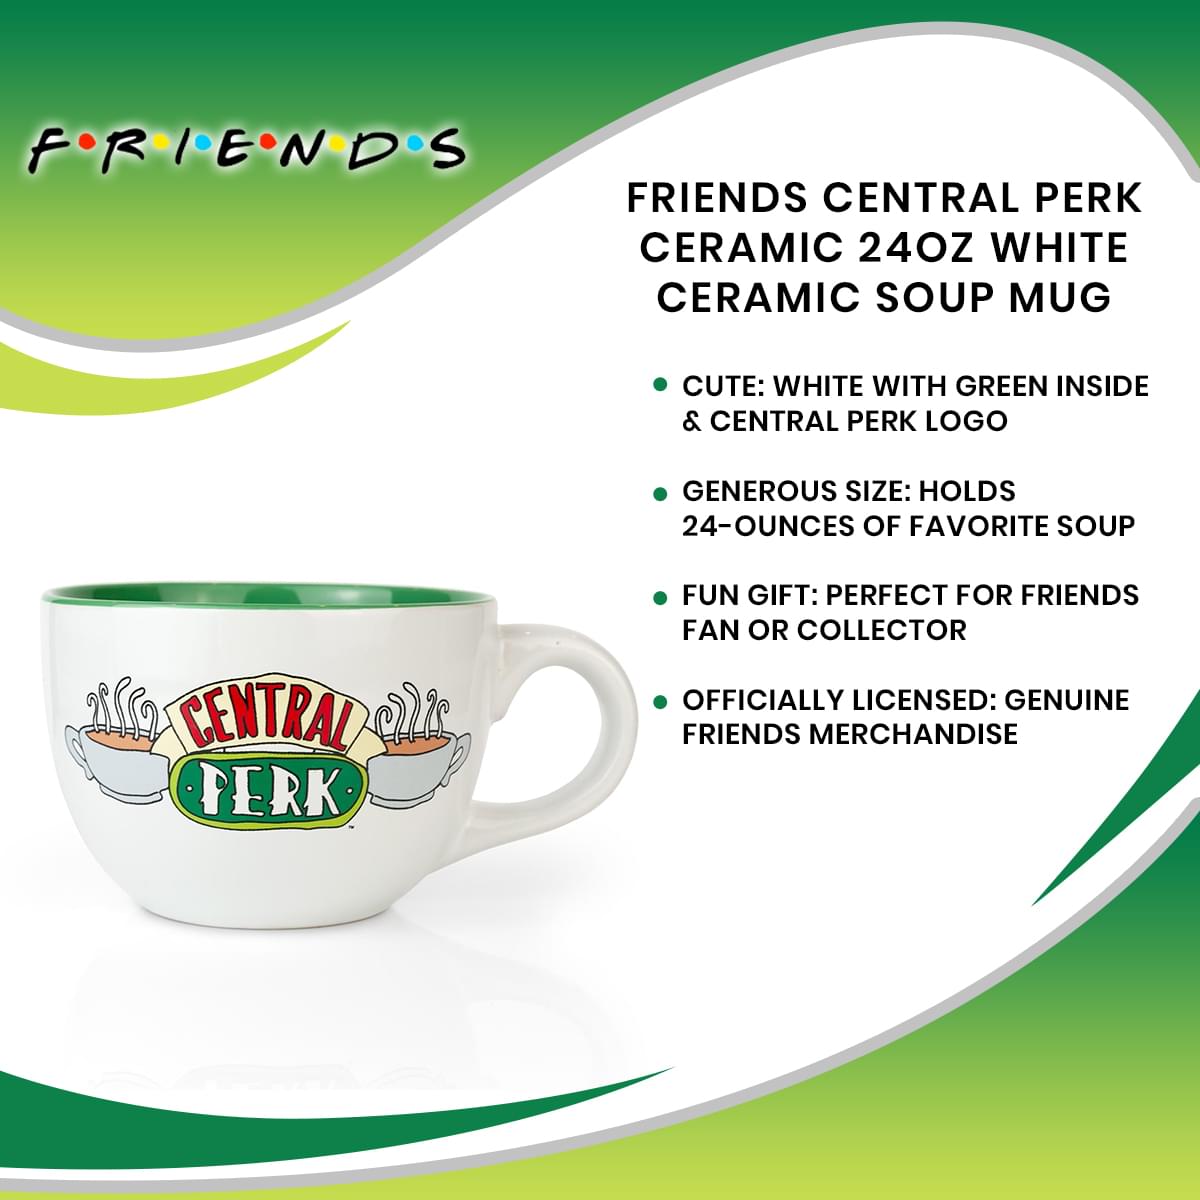 Friends Central Perk Ceramic 24oz White Ceramic Soup Mug